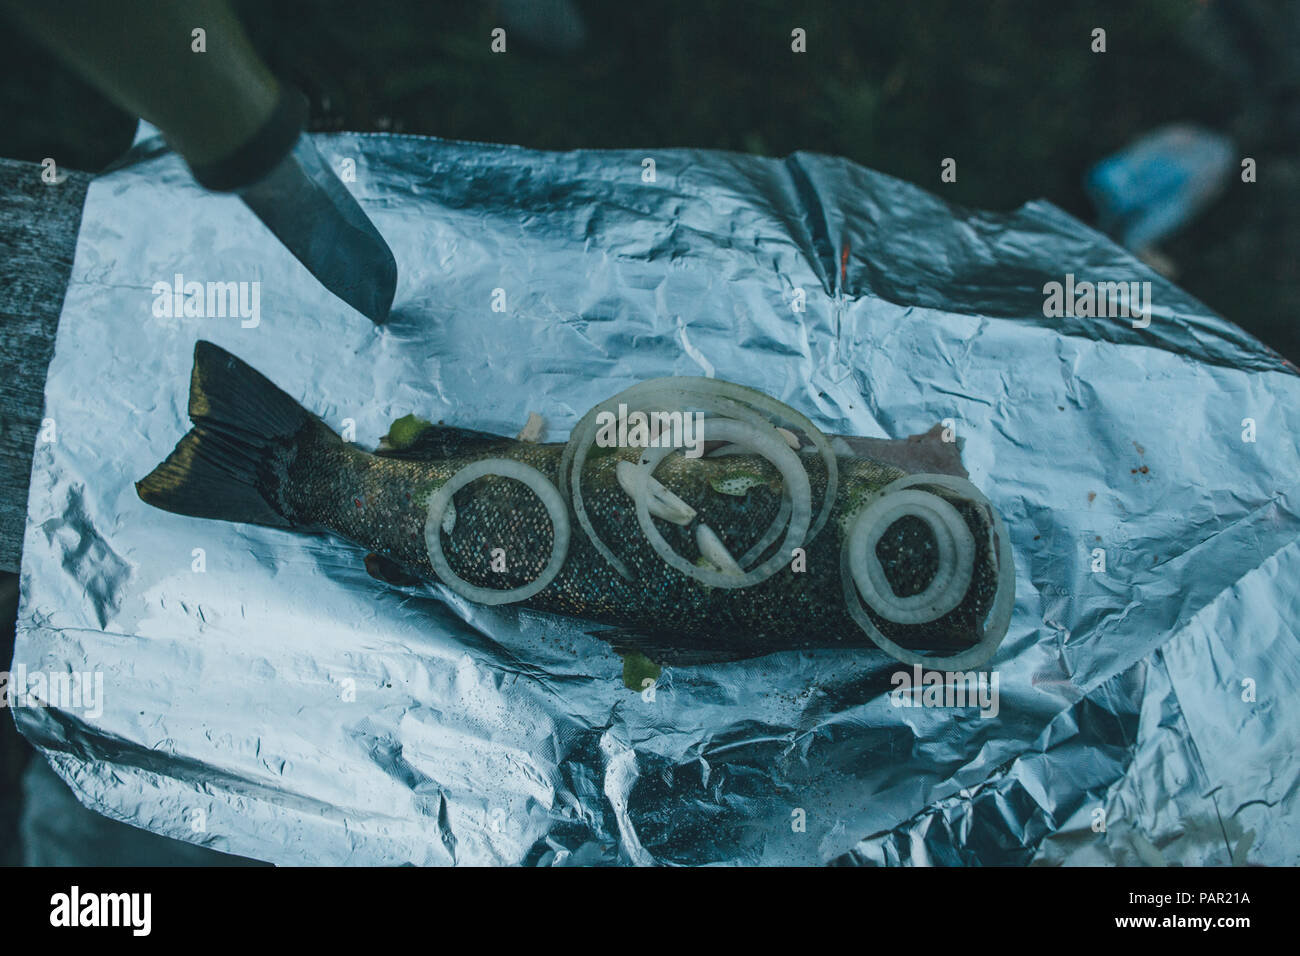 Norway, Lofoten, Moskenesoy, Freshly caught fish on aluminium foil, ready to cook Stock Photo